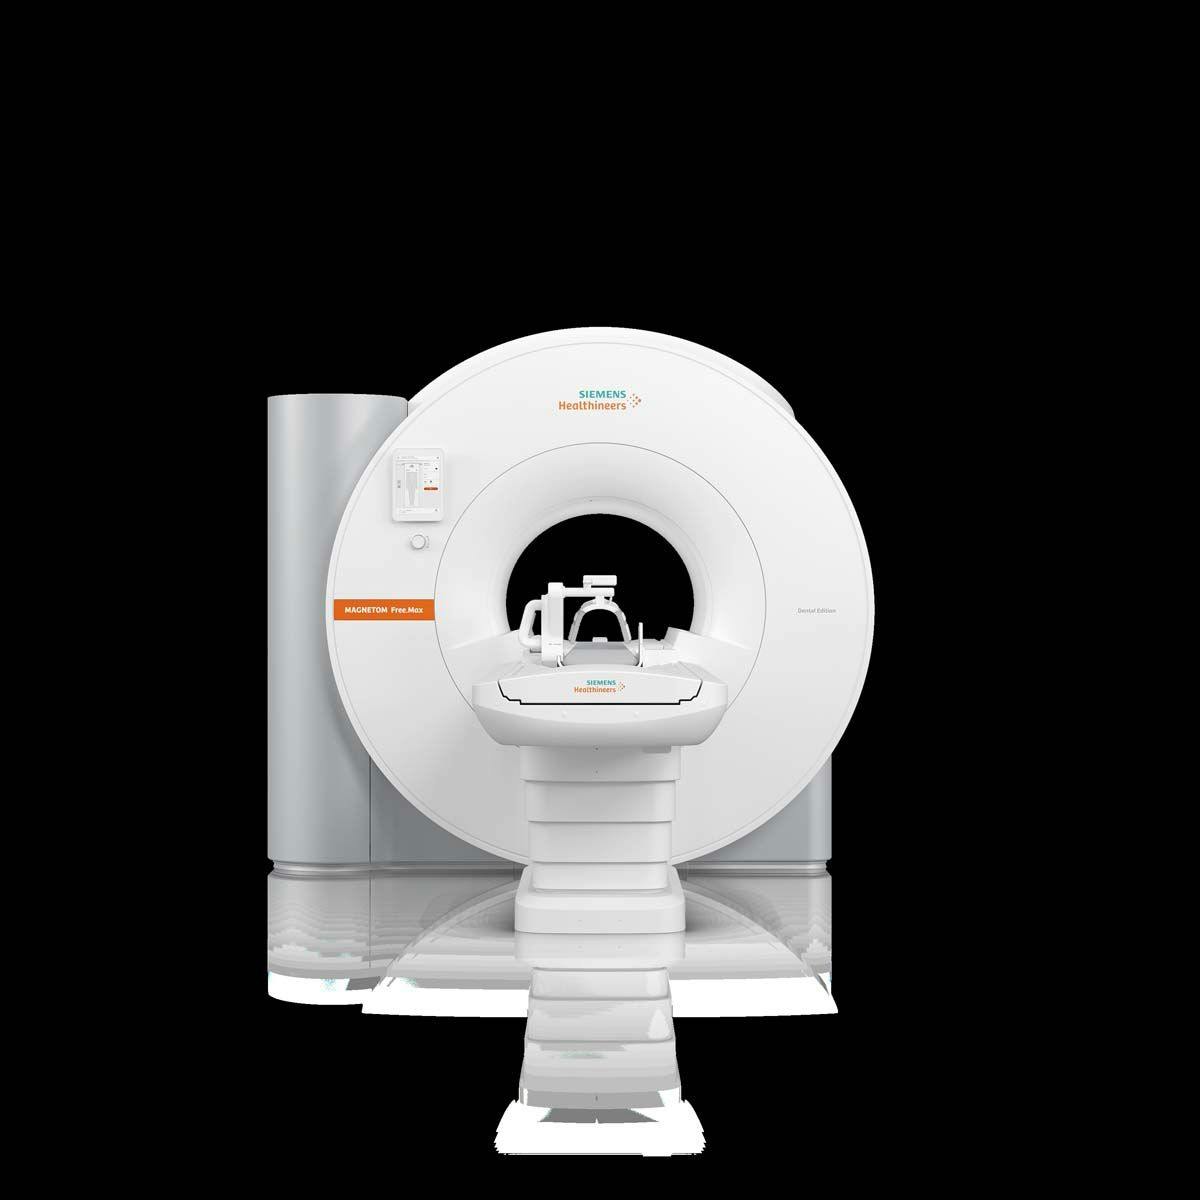 Dentsply Sirona and Siemens Healthineers Developing Dental-Dedicated MRI System. Image credit: © Dentsply Sirona